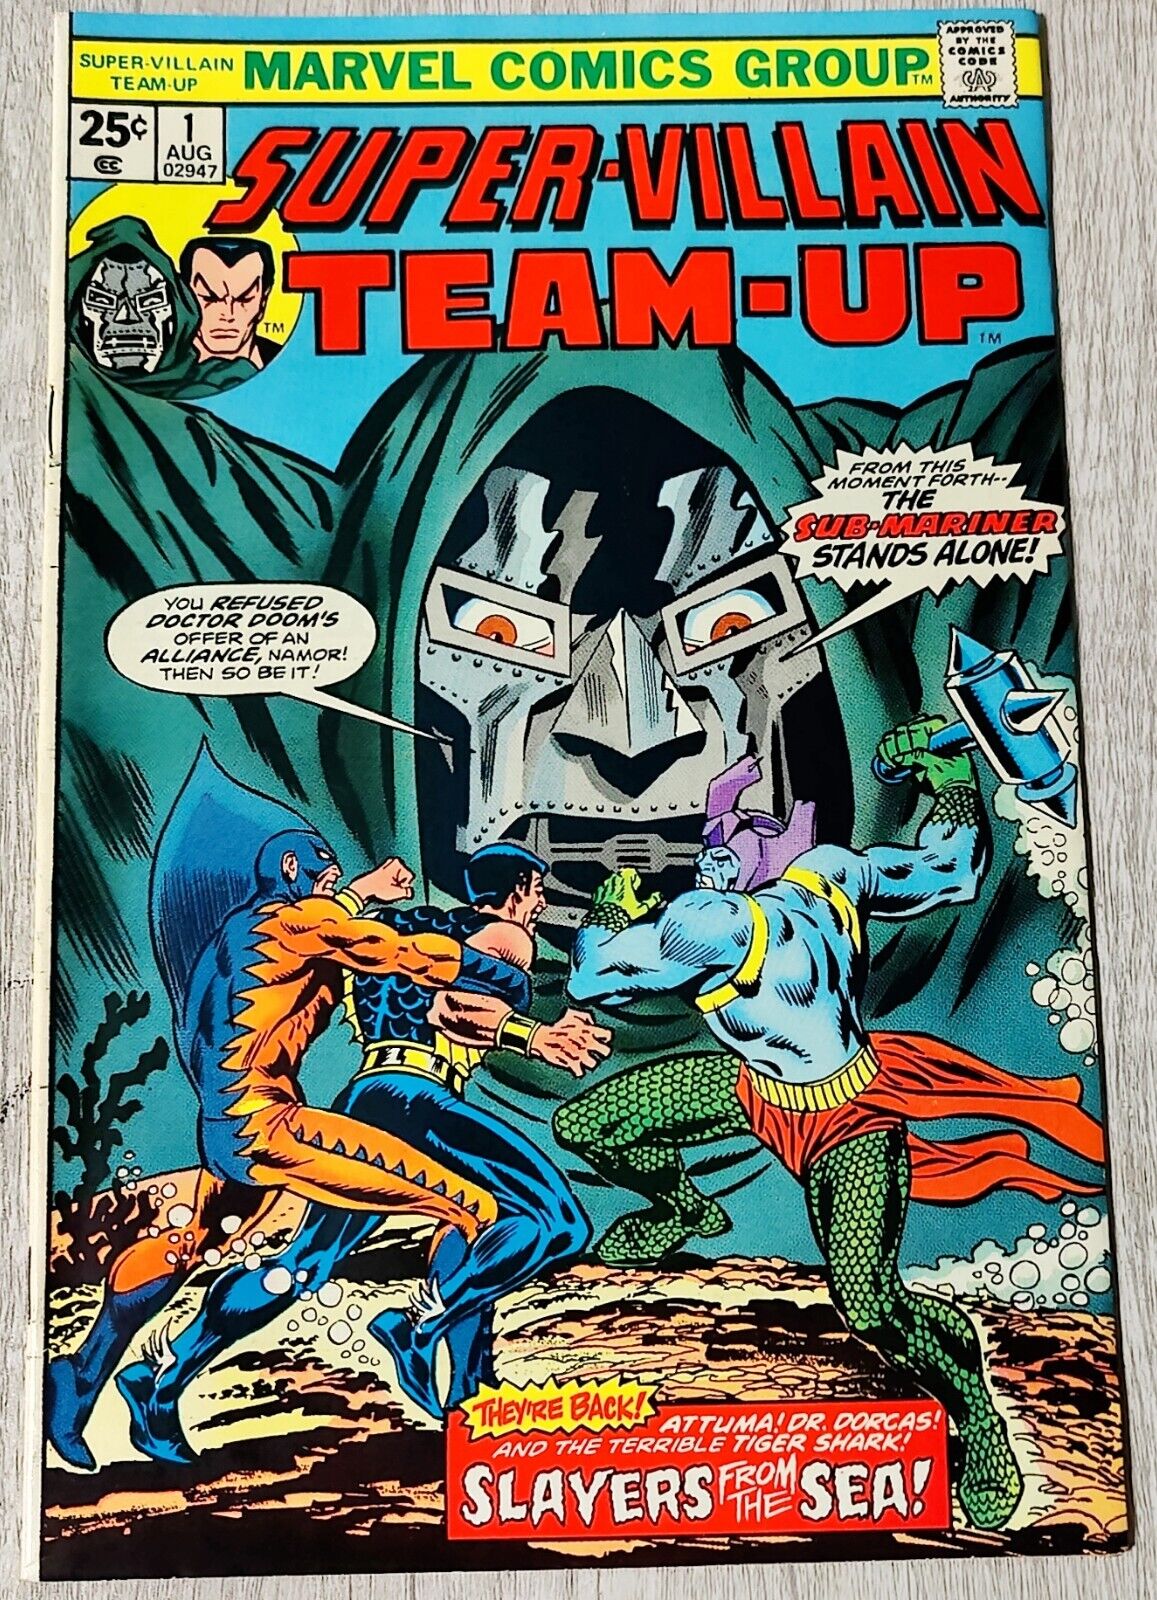 Super Villain Team Up #1 - Very Fine